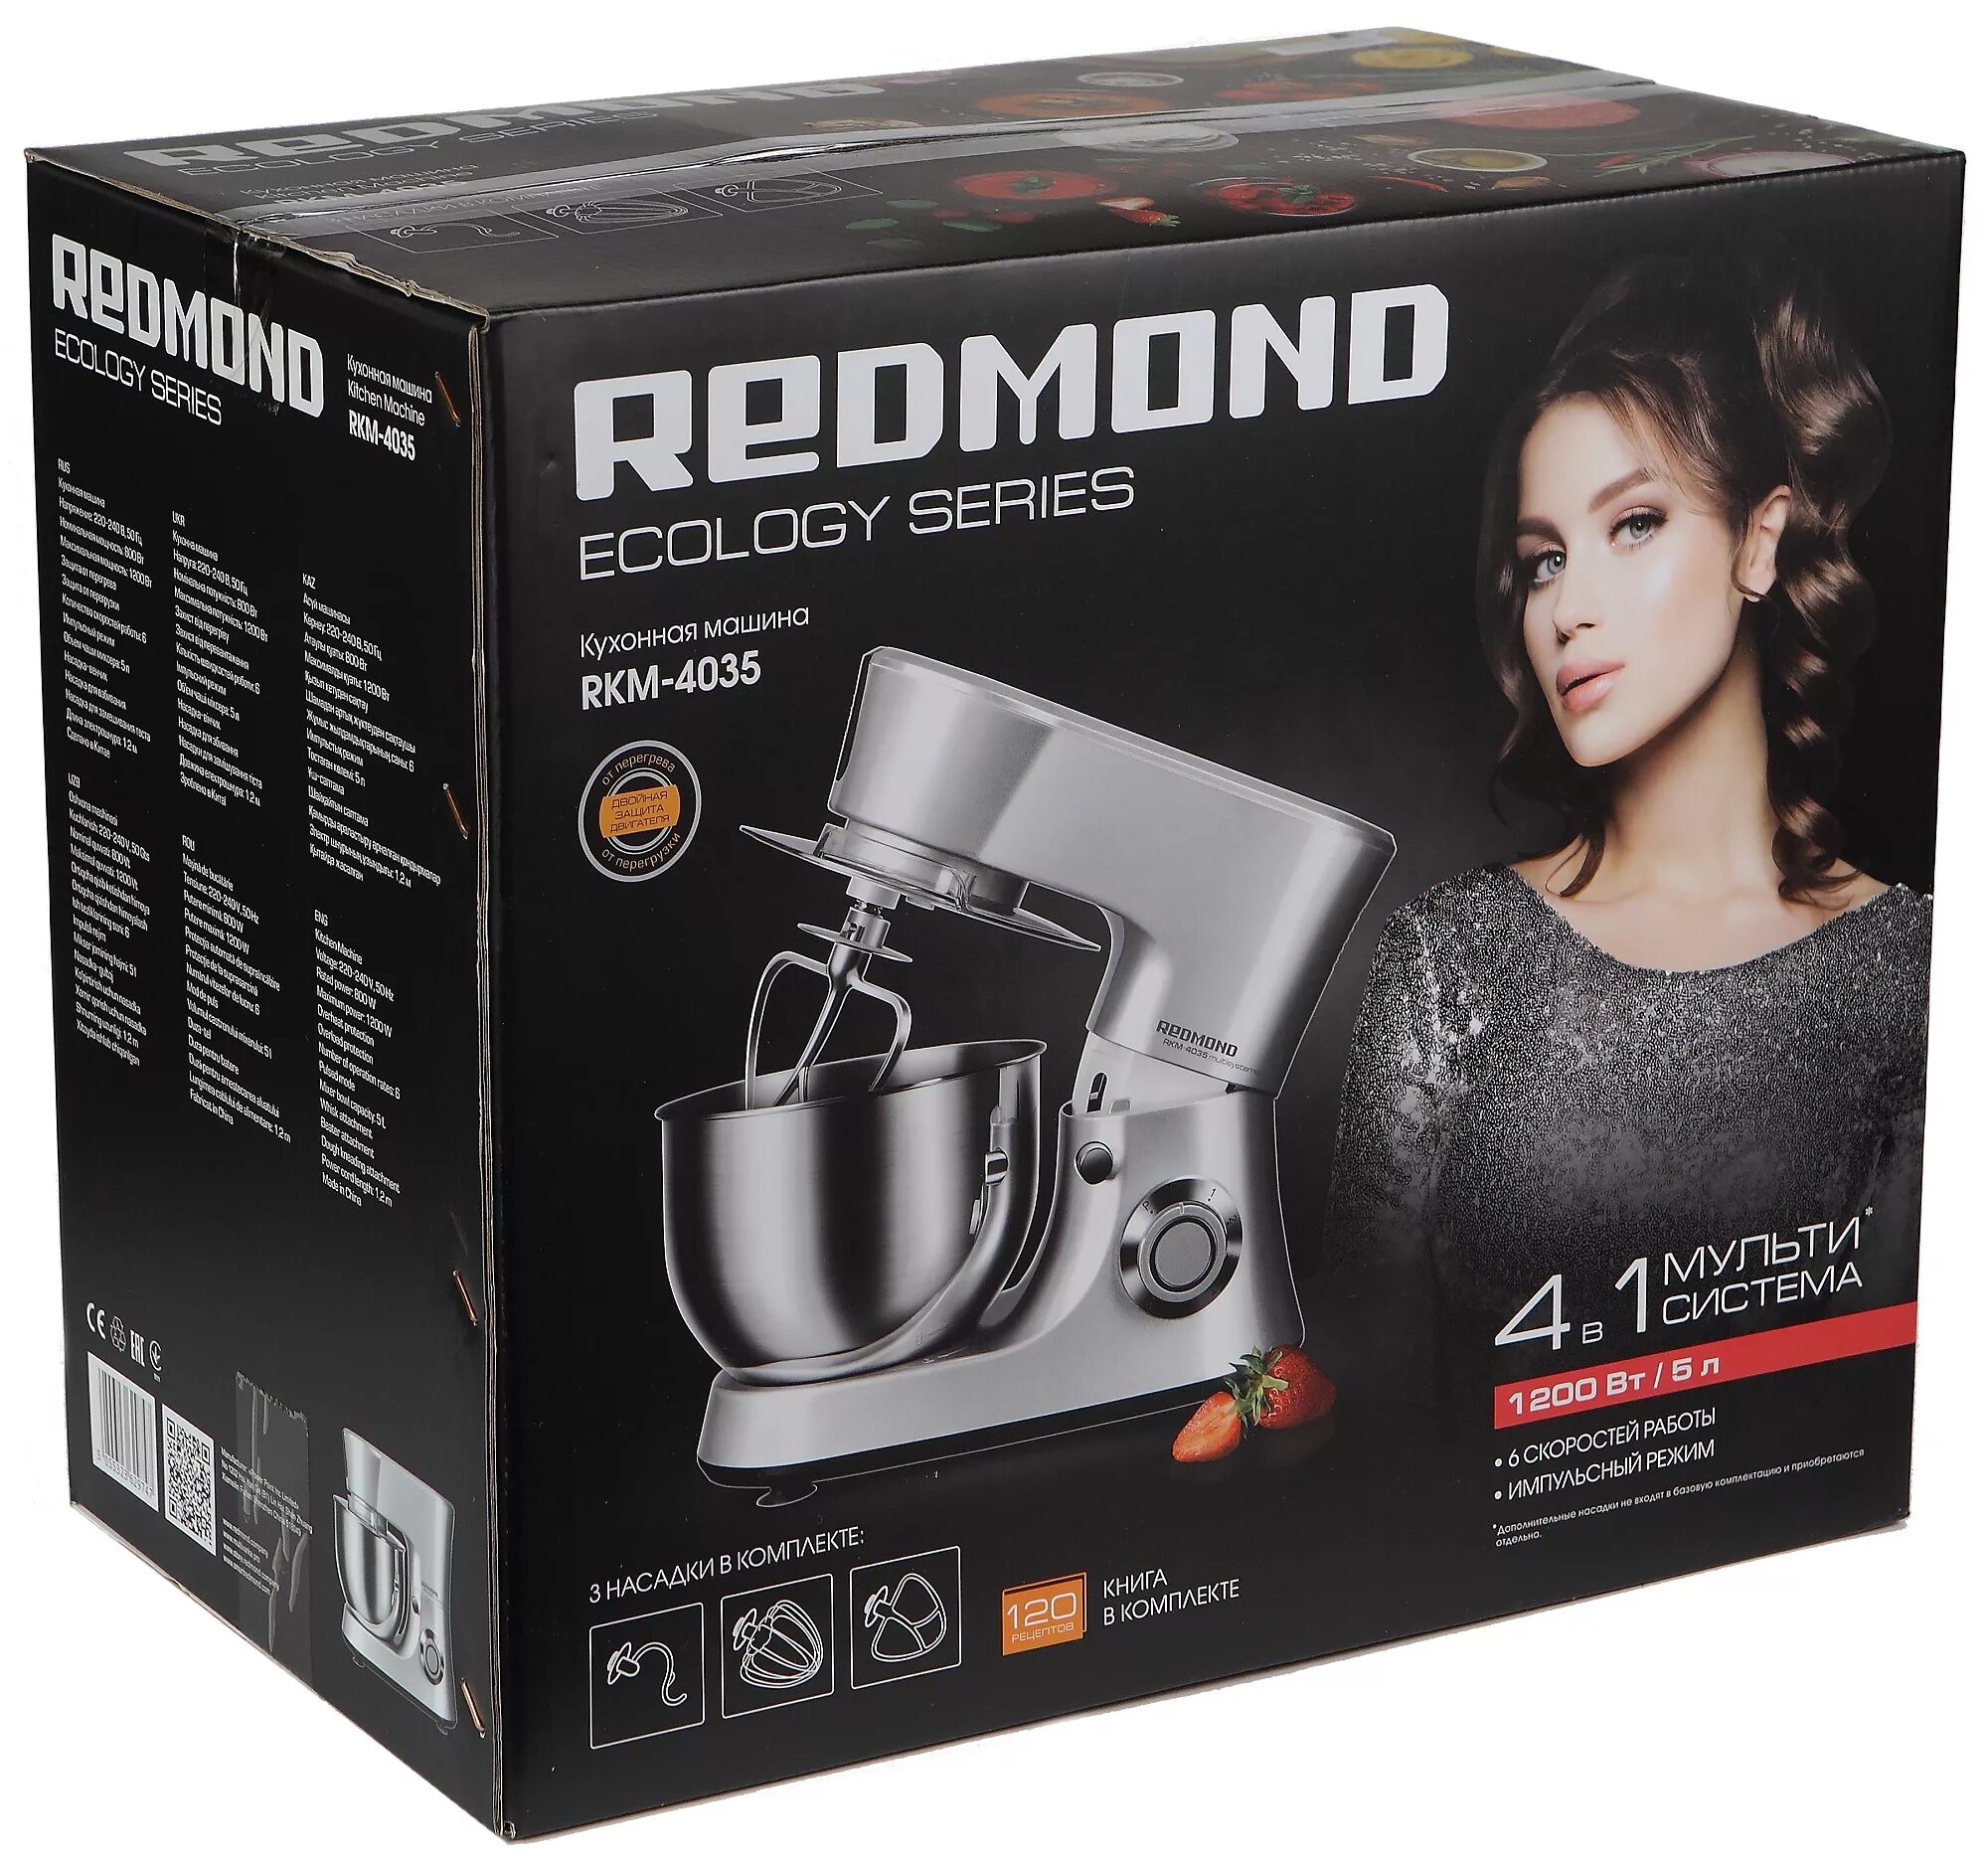 Кухонная машина Redmond RKM-4035. Планетарный миксер редмонд RKM-4035. Планетарий миксер Ремдон. Redmond RFM-5318.